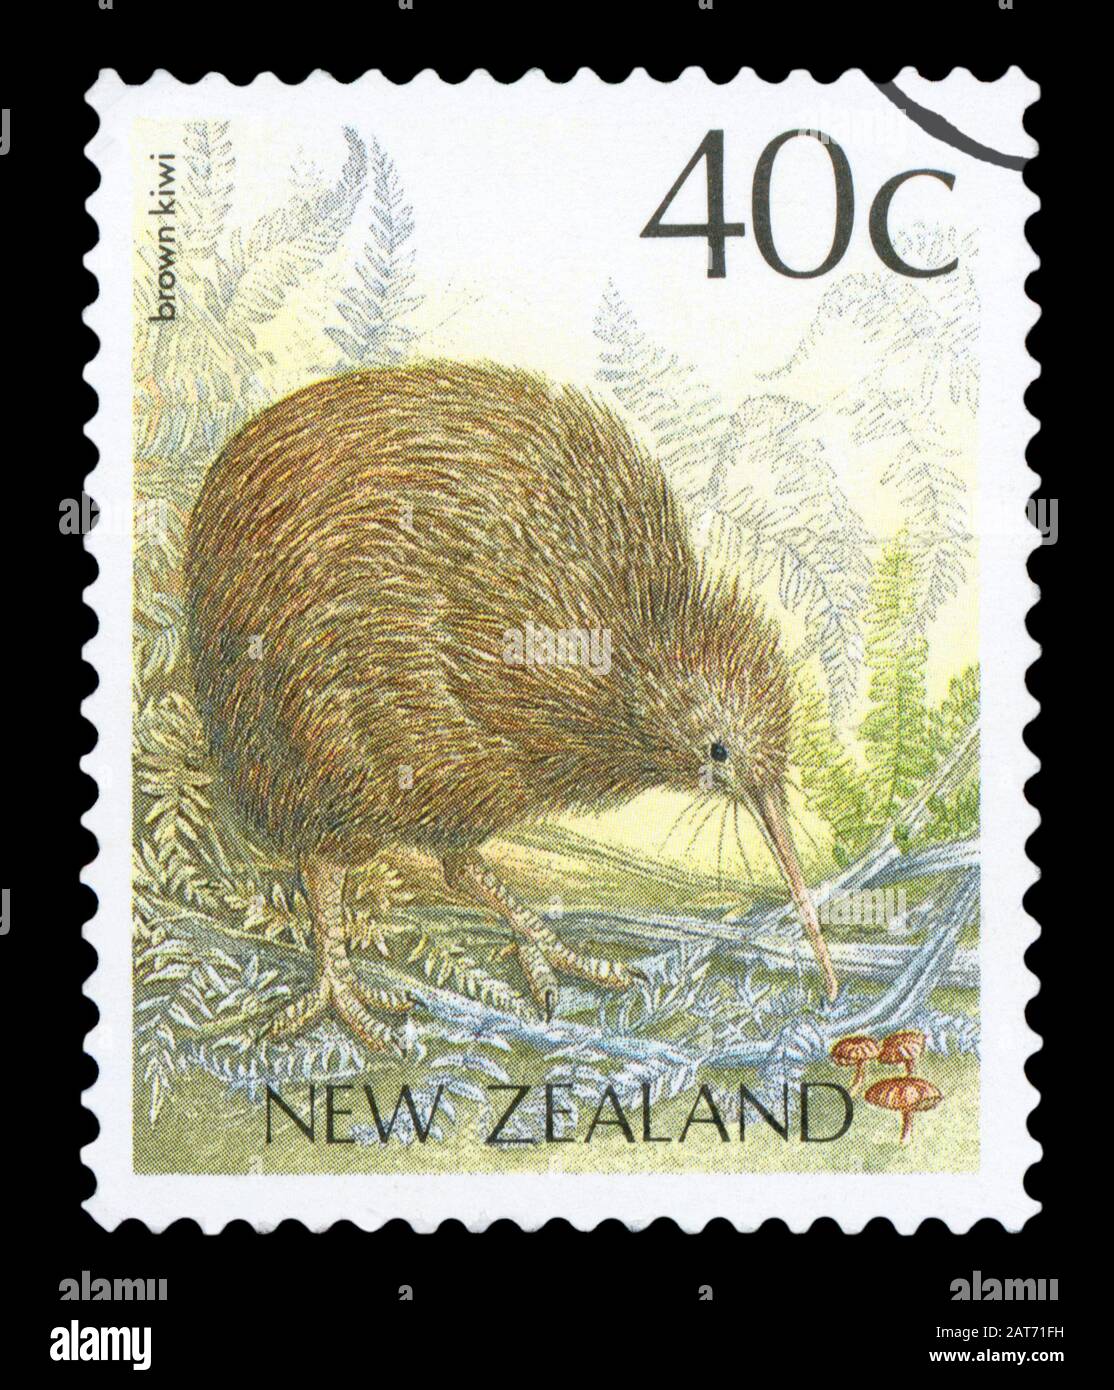 New Zealand - Postage stamp show the Brown Kiwi Stock Photo